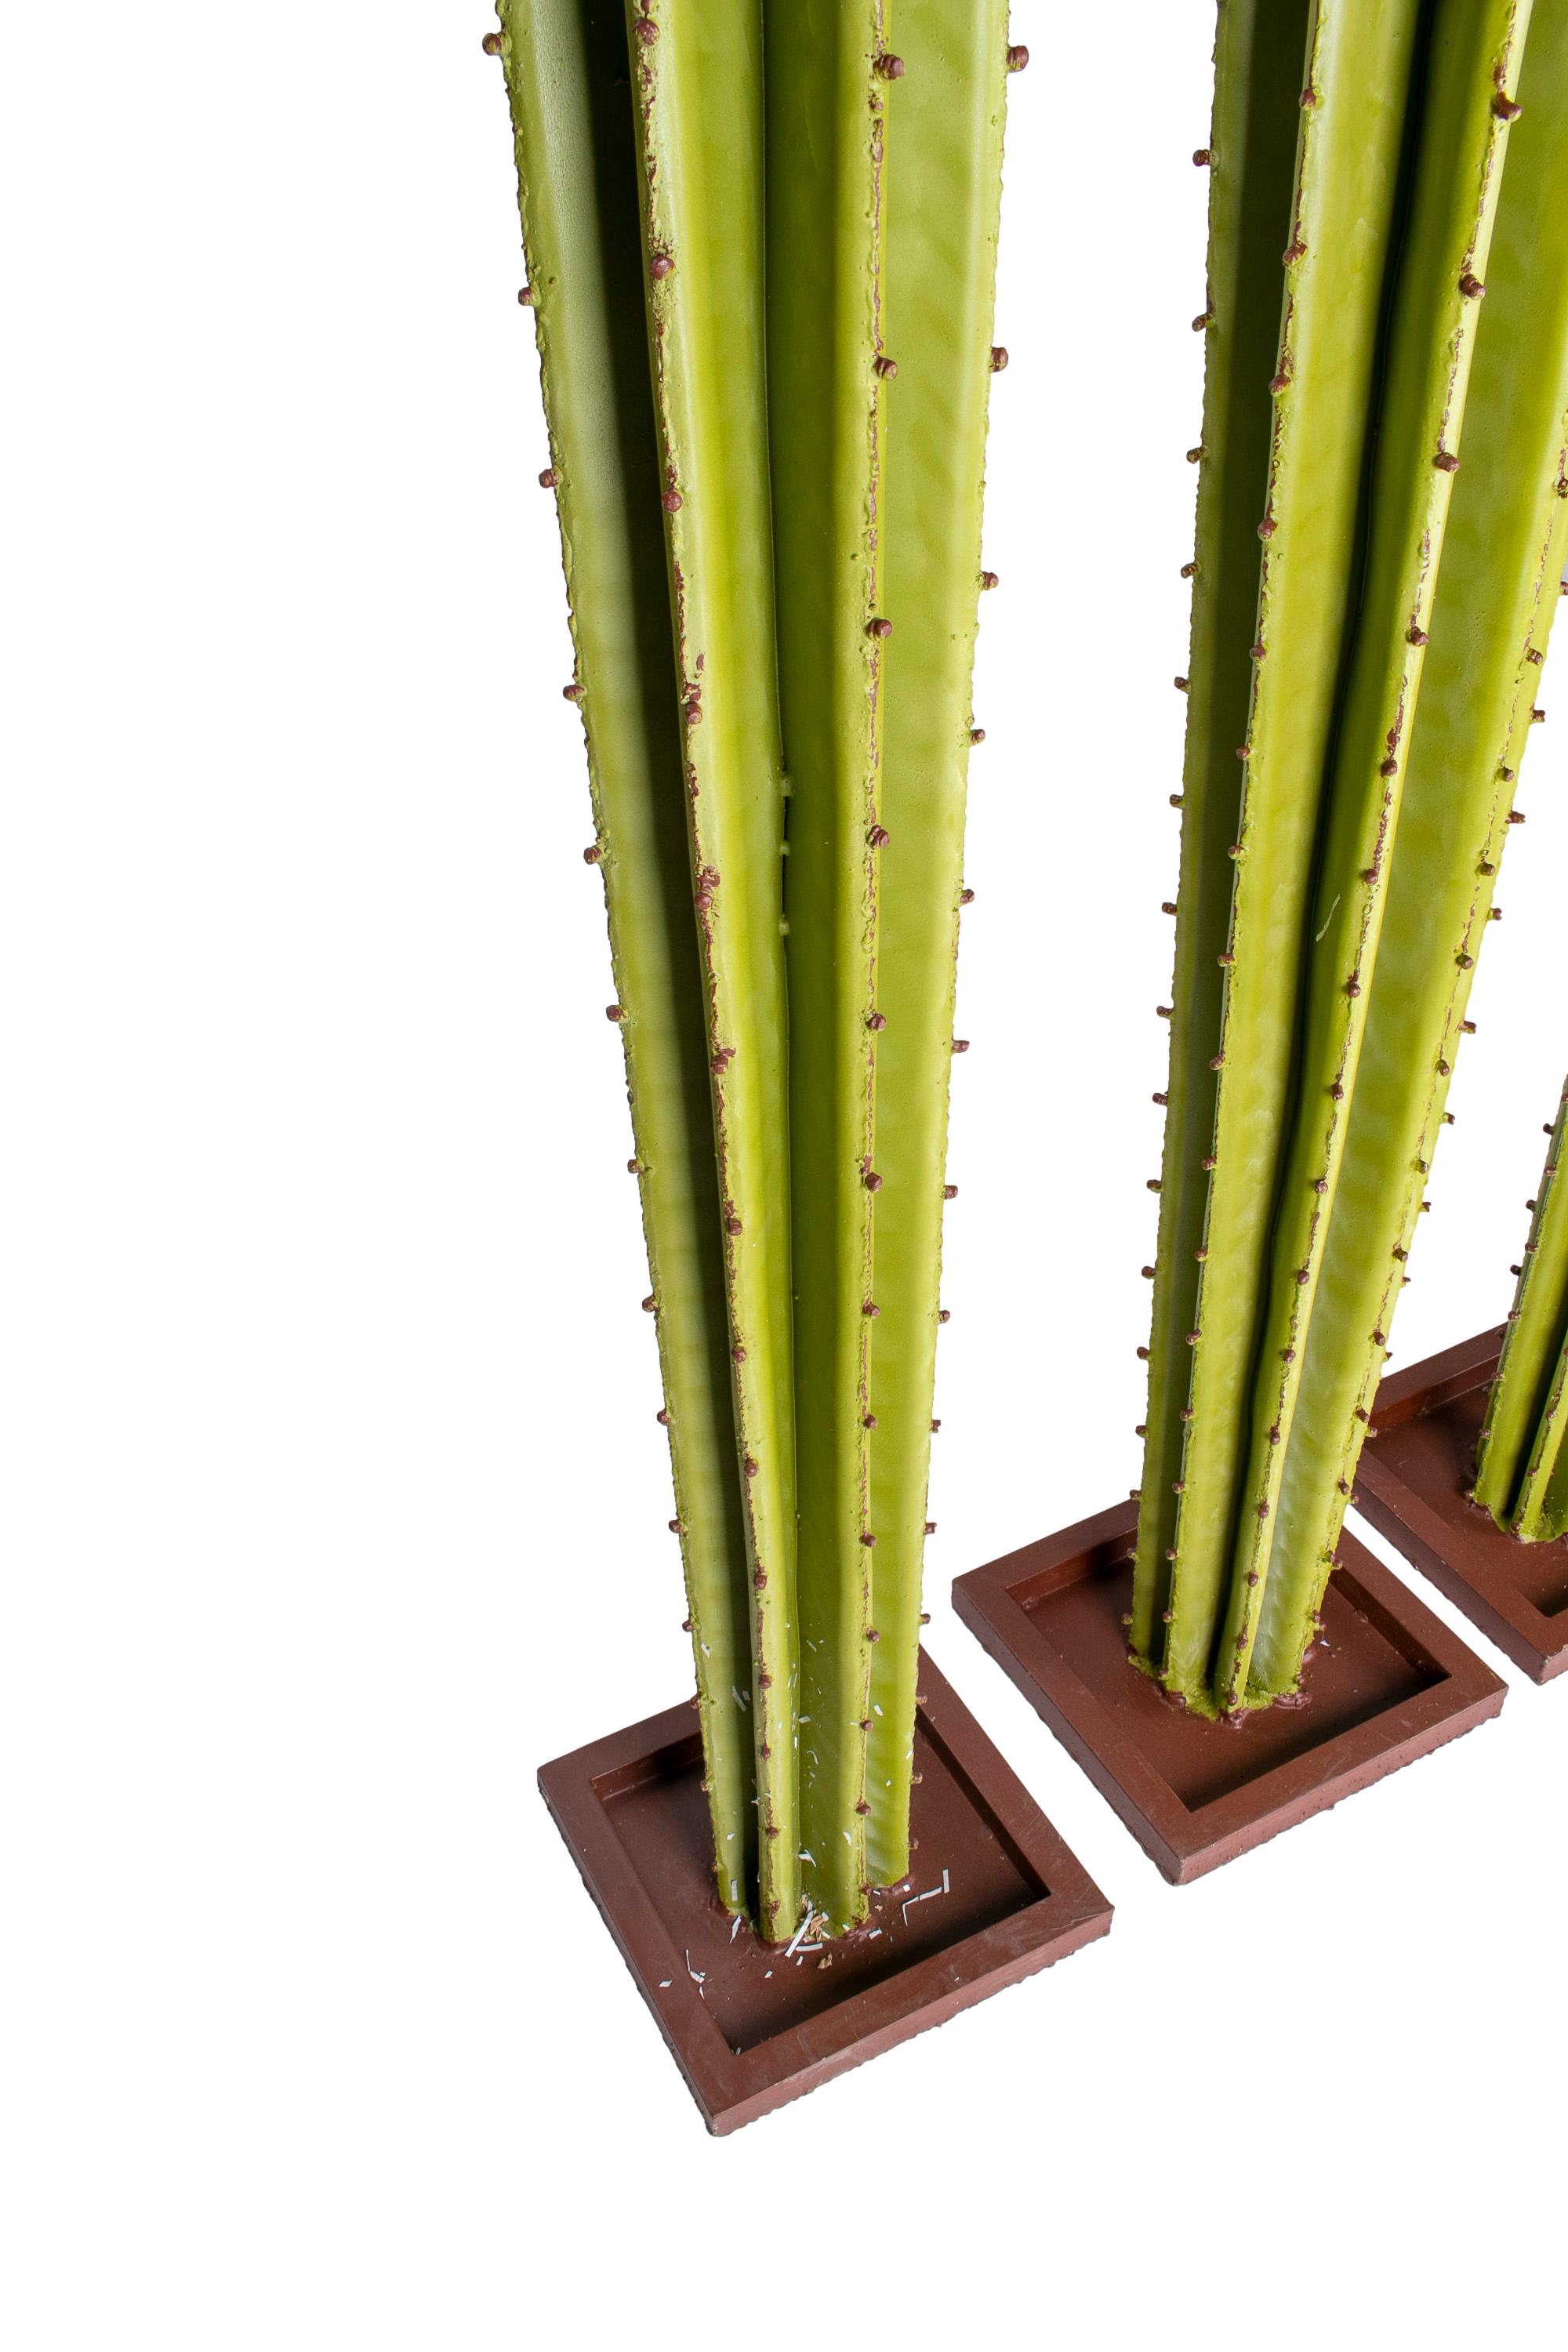 3 sided cactus